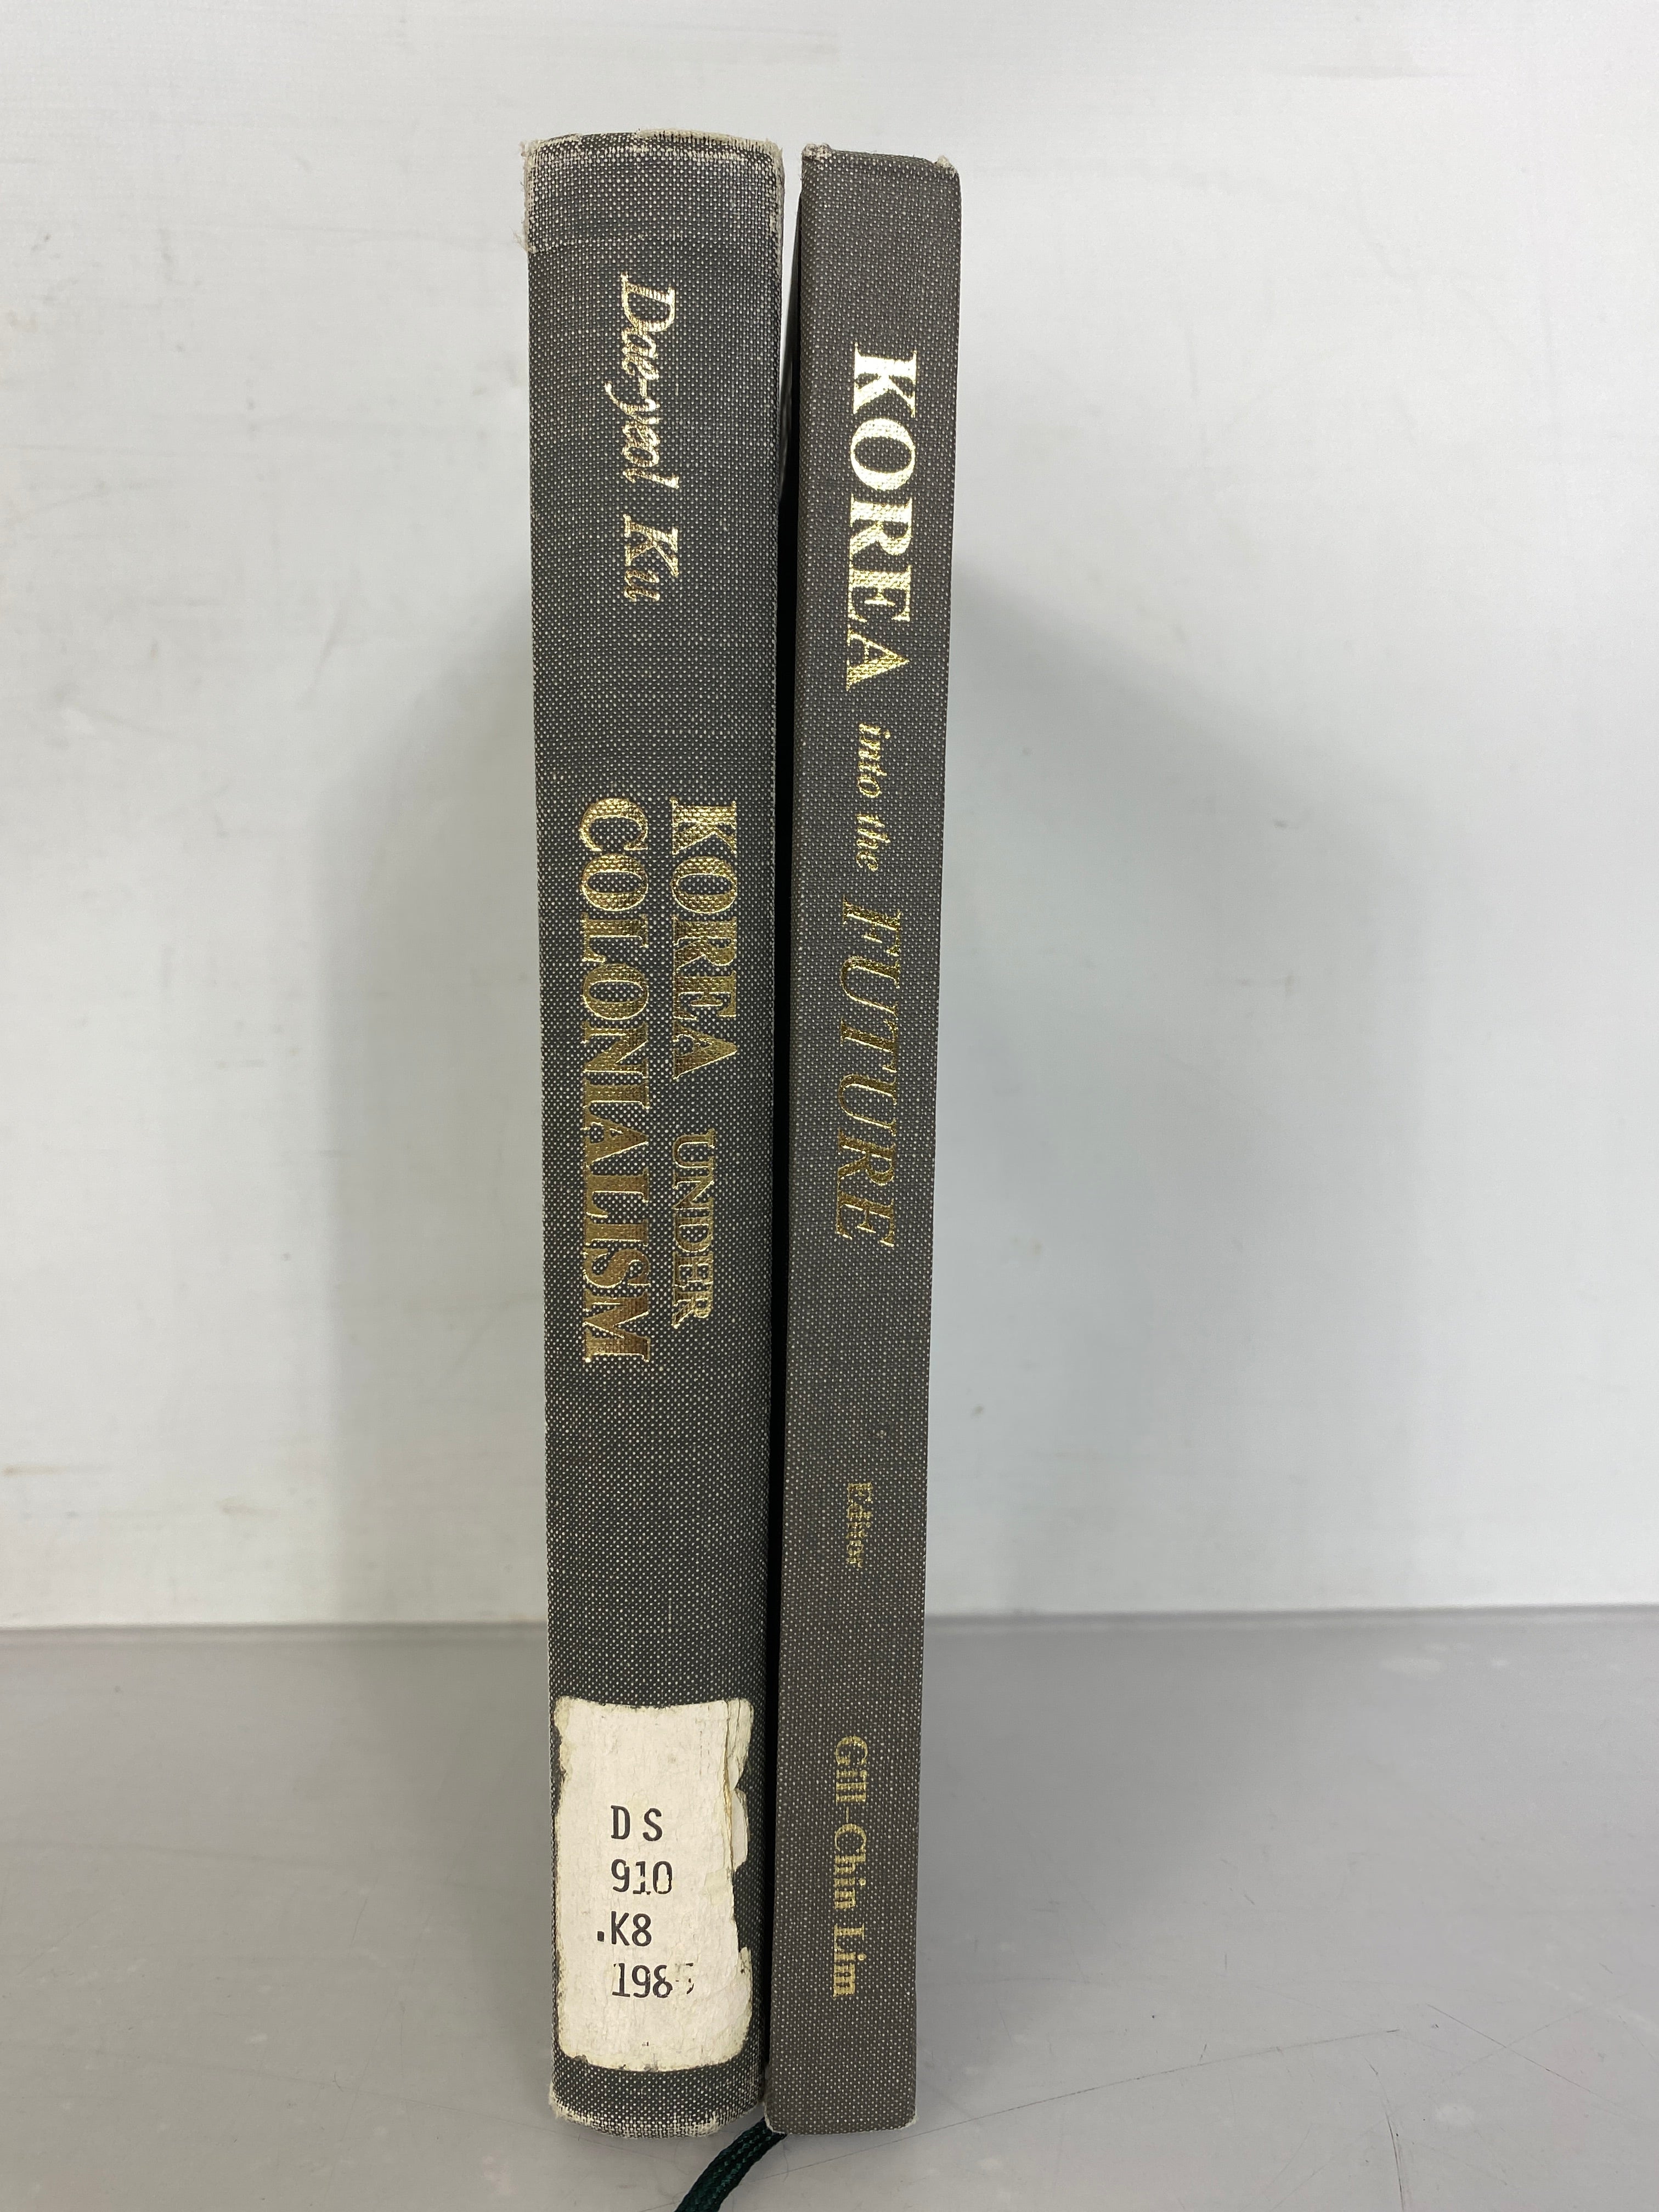 Lot of 2 Korean Studies Books 1985-1994  HC